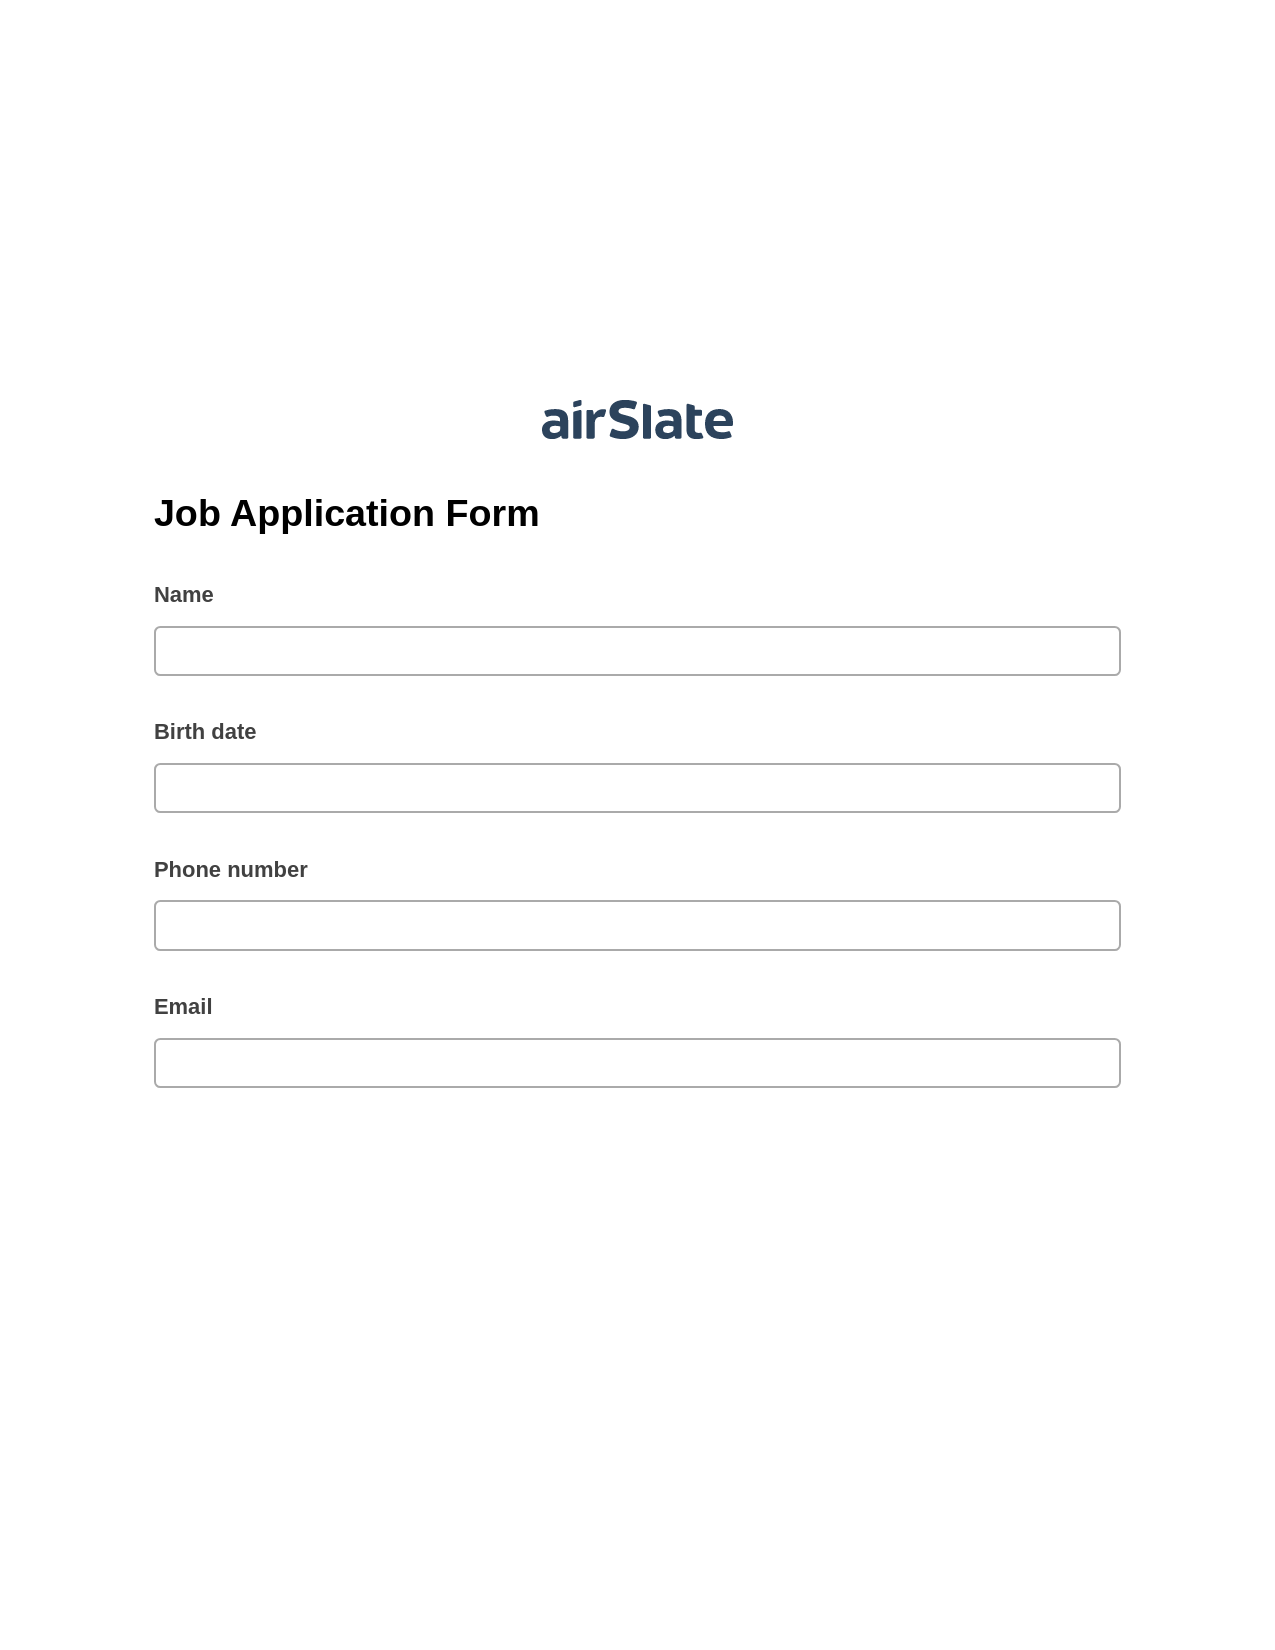 Job Application Form Pre-fill from MySQL Bot, Create Salesforce Record Bot, Box Bot